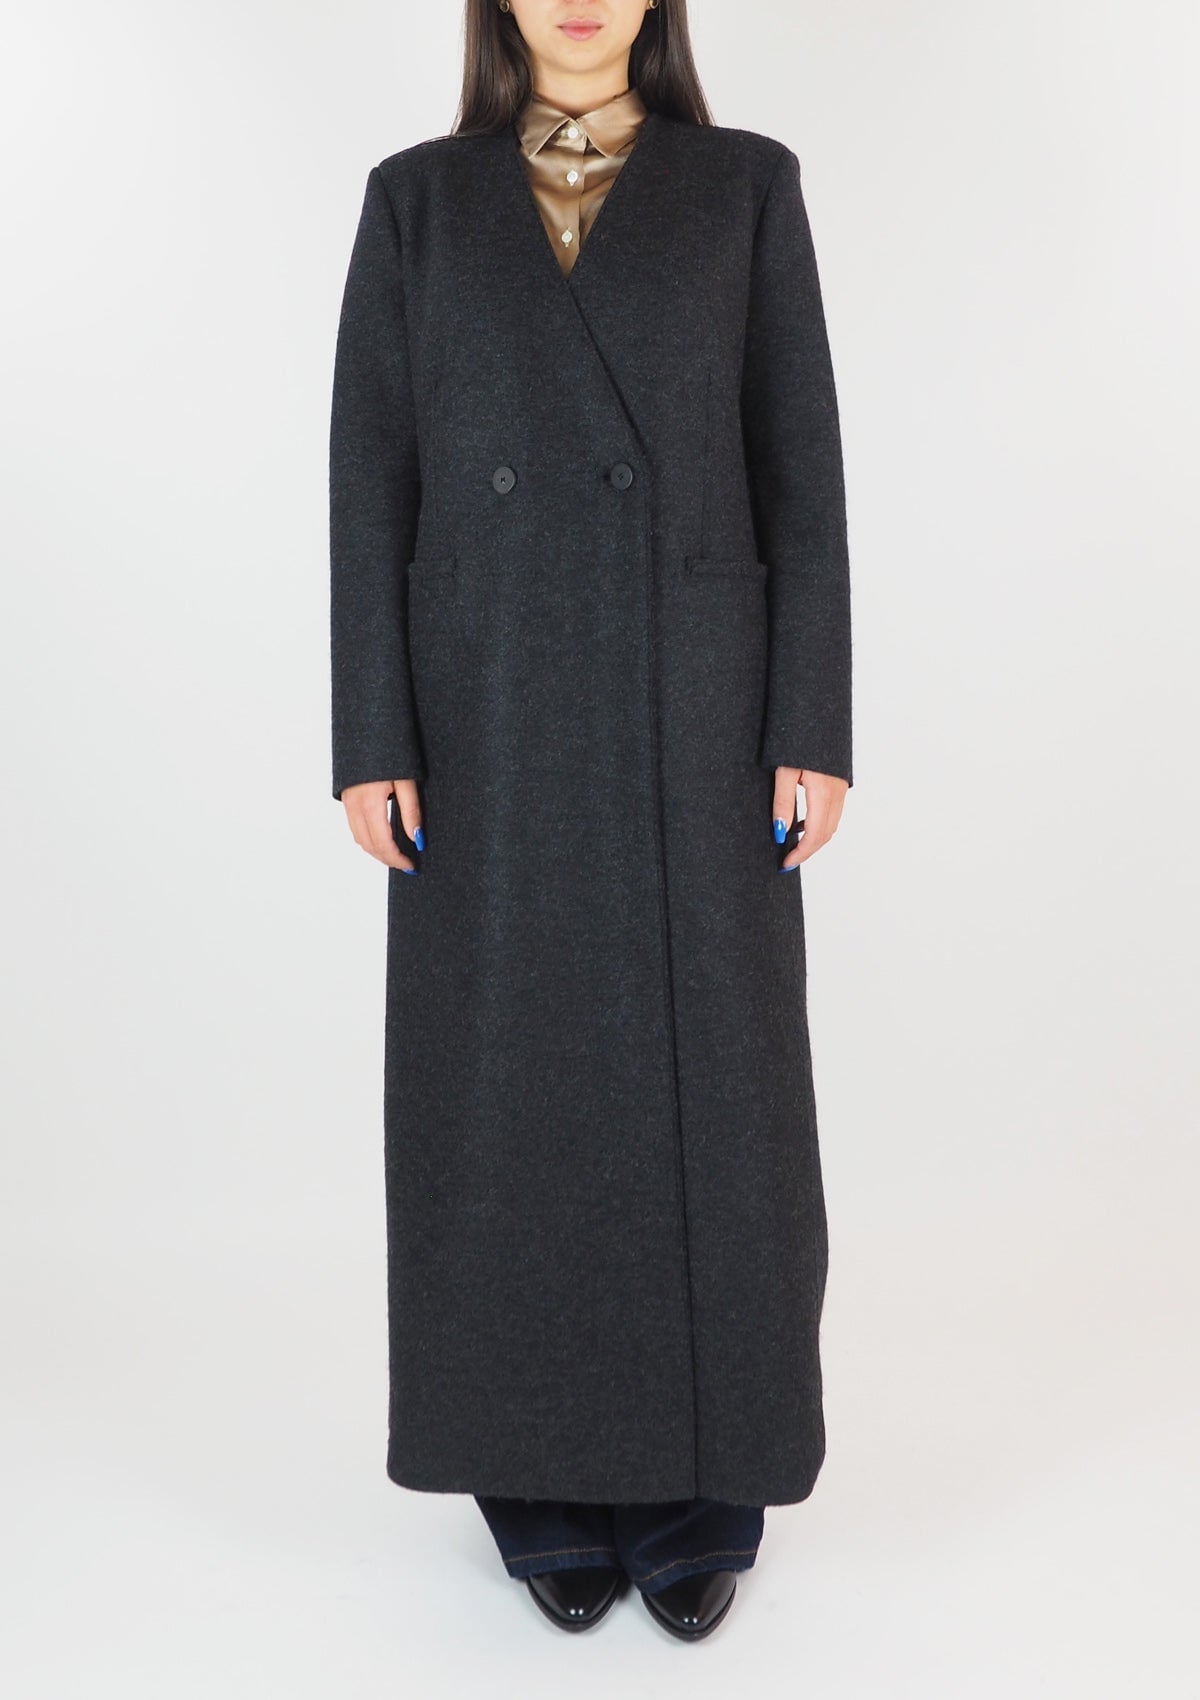 Damen Mantel aus gepresster Wolle in Dunkelgrau Damen Mantel Harris Wharf London 